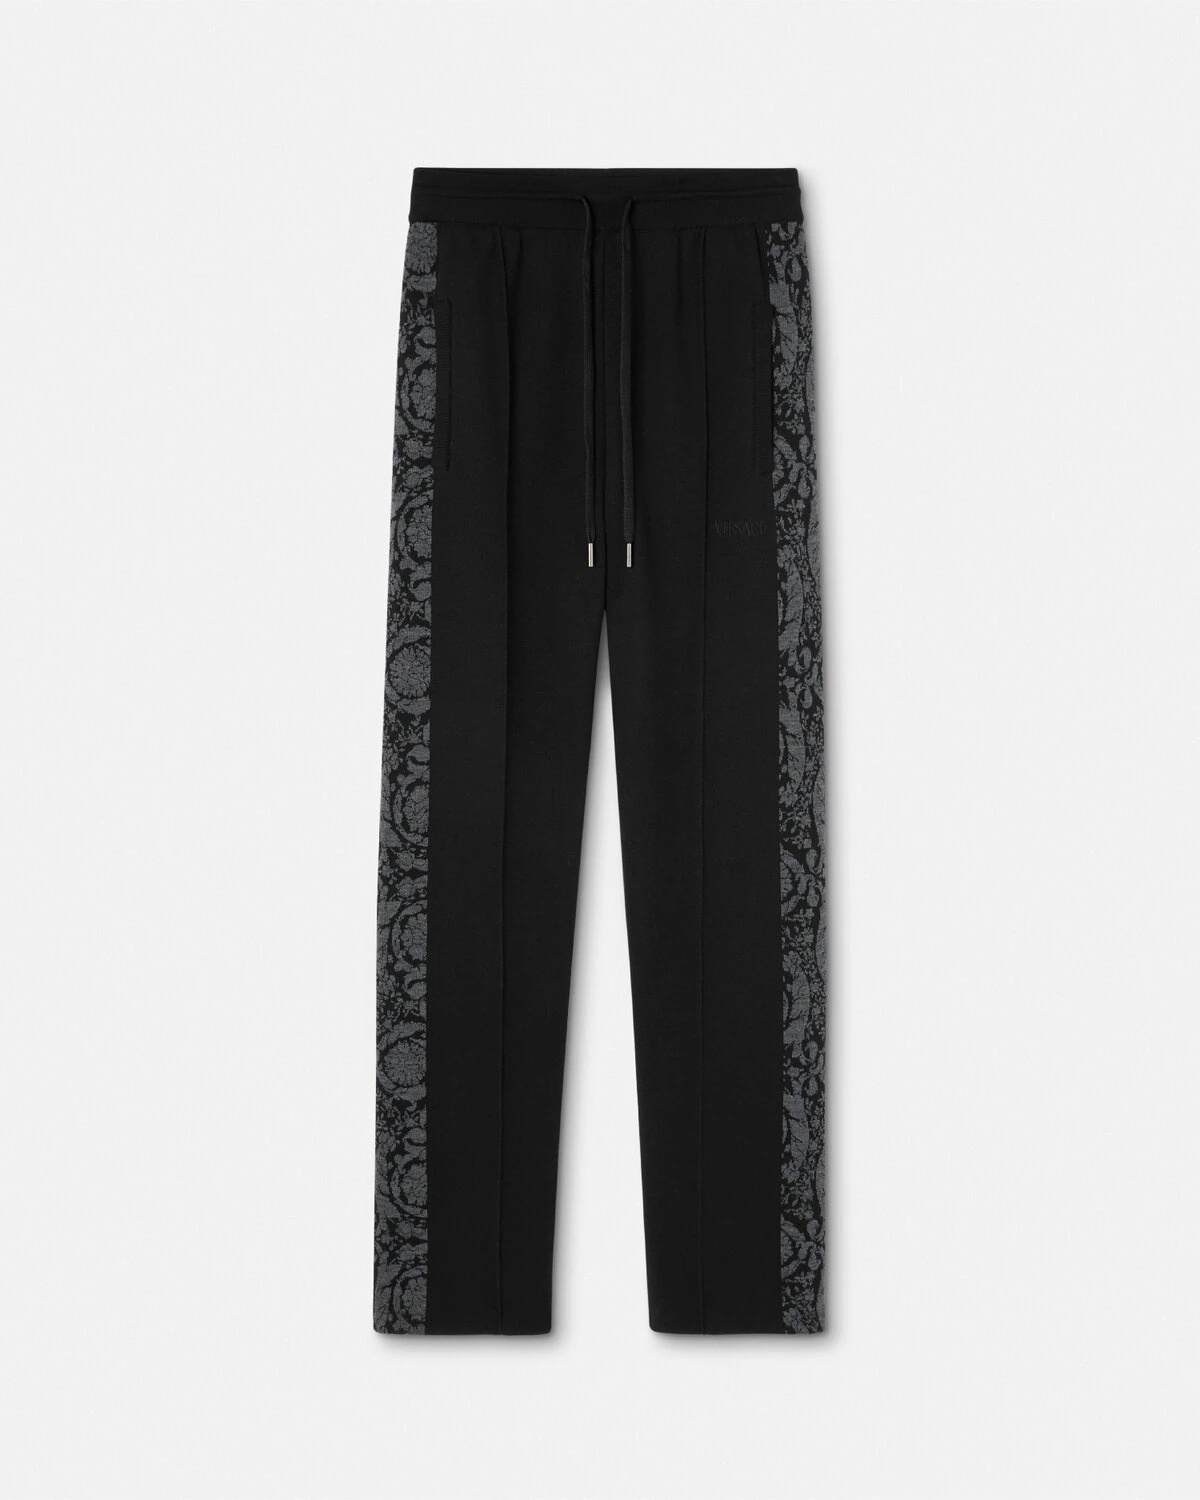 Barocco Jacquard Knit Pants - 1